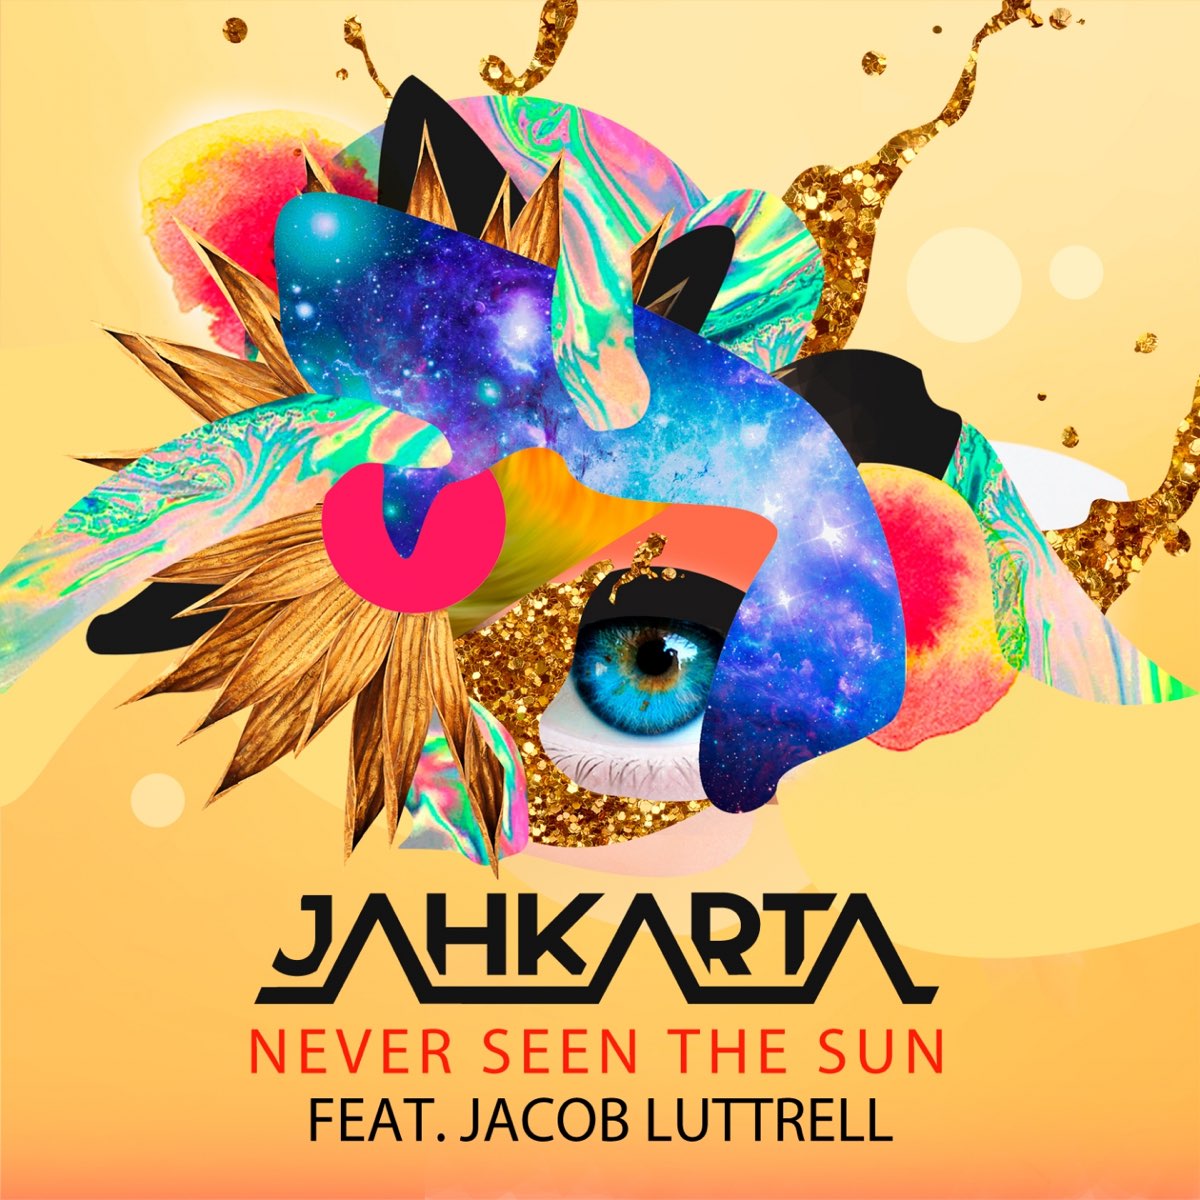 Jacob feat. Never seen the Sun. Jahkarta. Bomba Estereo feat. Manu Chao - me Duele.